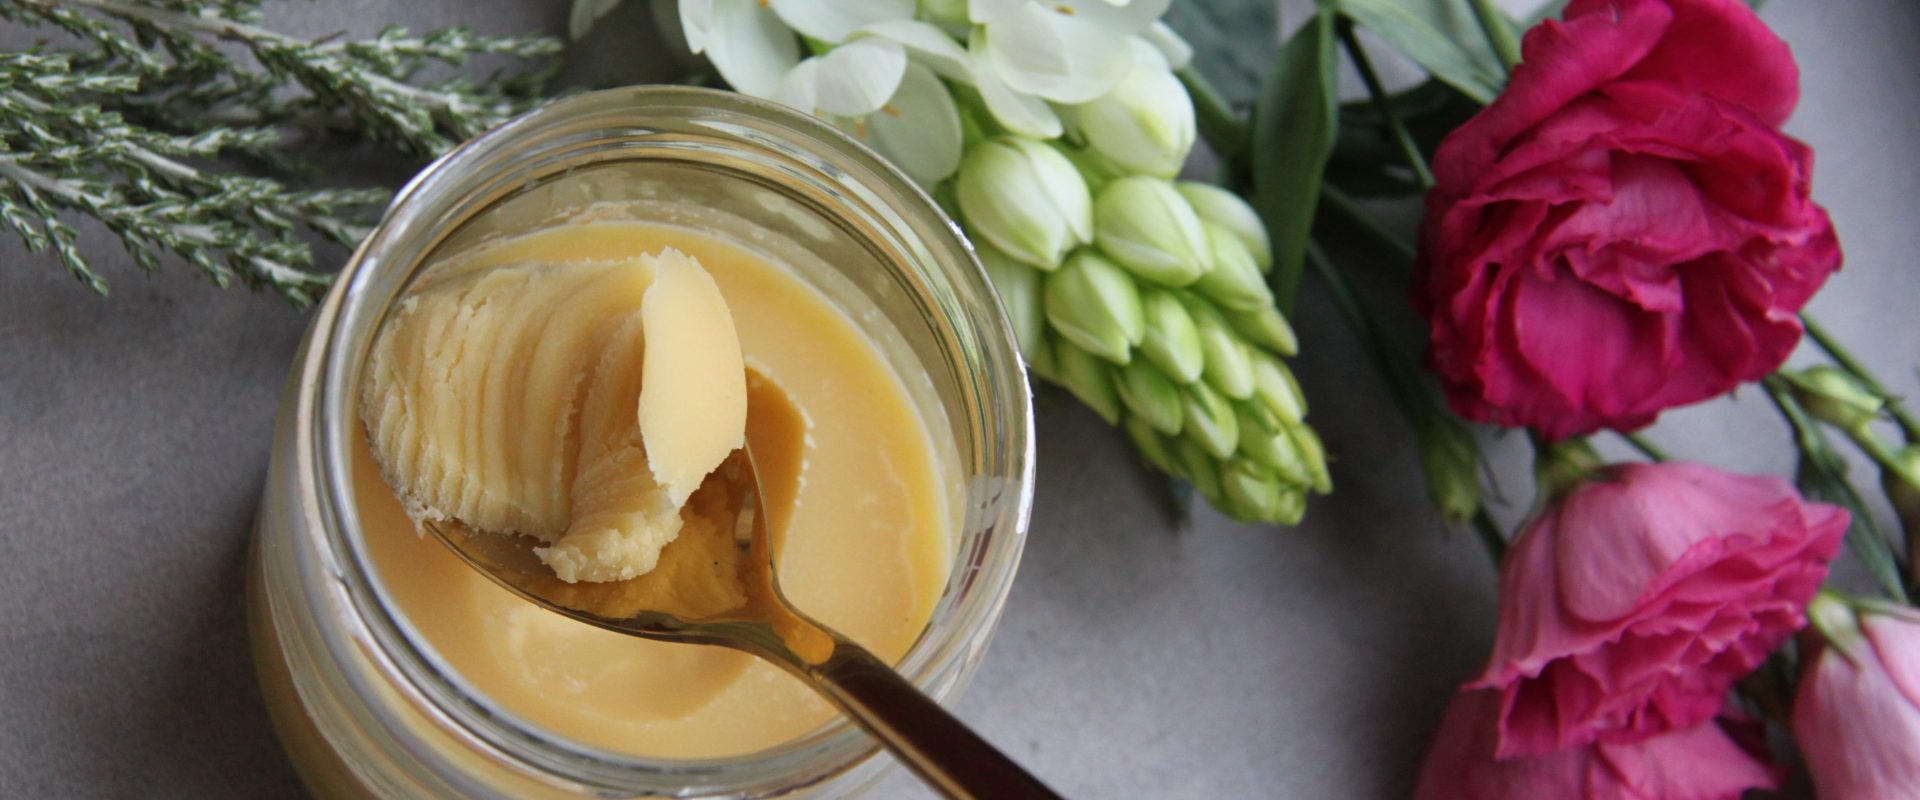 Shea butter baby: the top 10 benefits of using shea butter in your beauty regimen